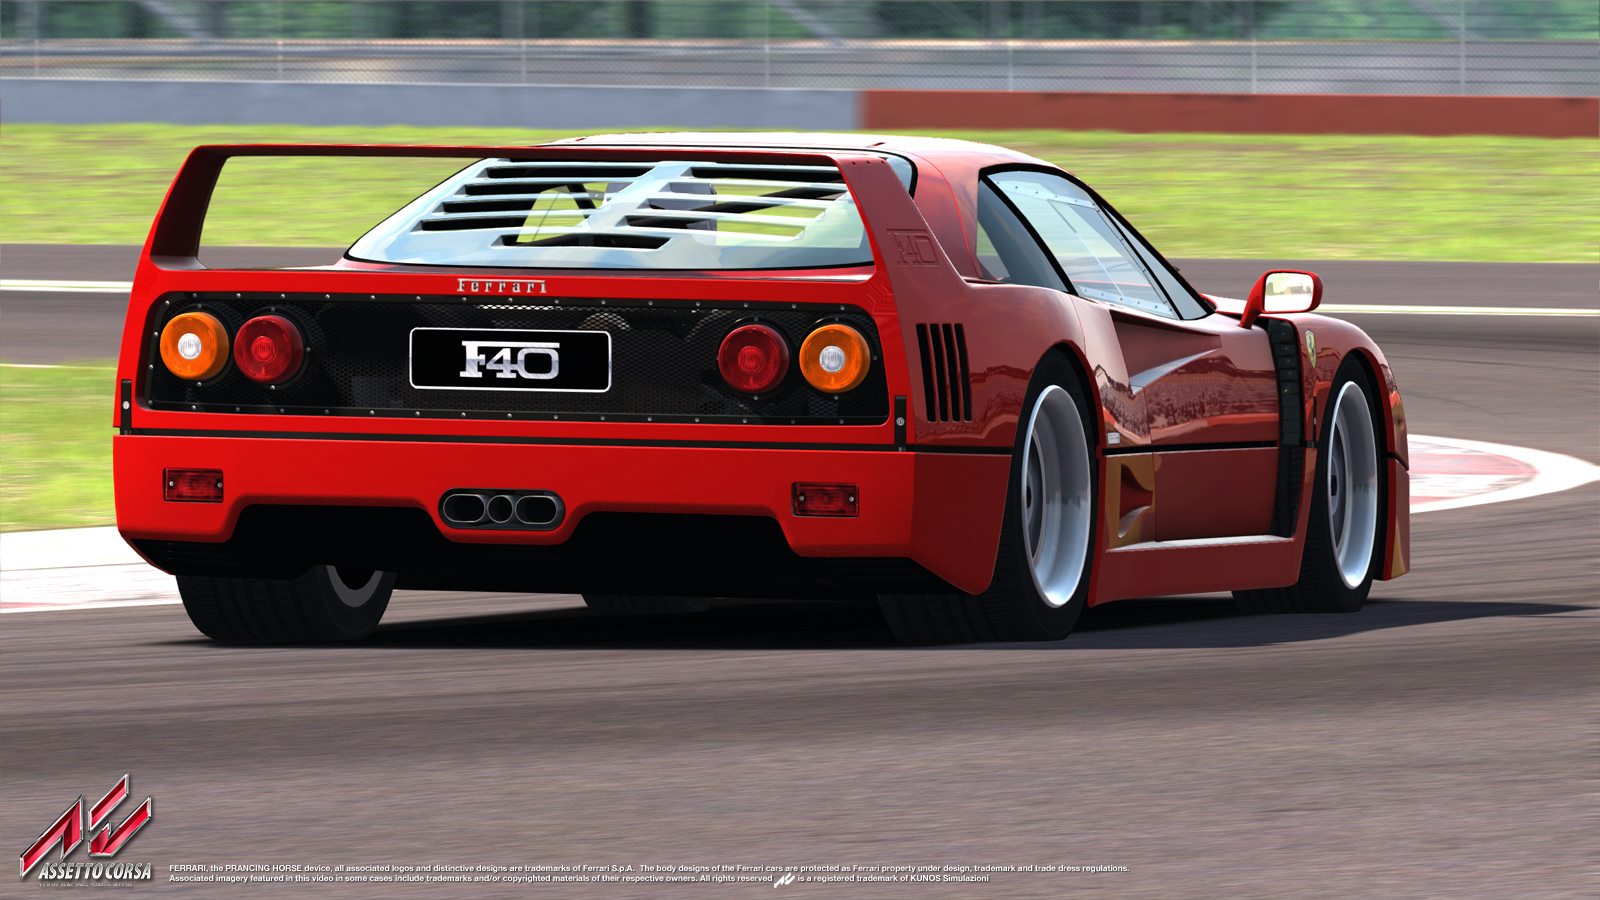 Assetto_Corsa_Ferrari_F40_Preview.jpg